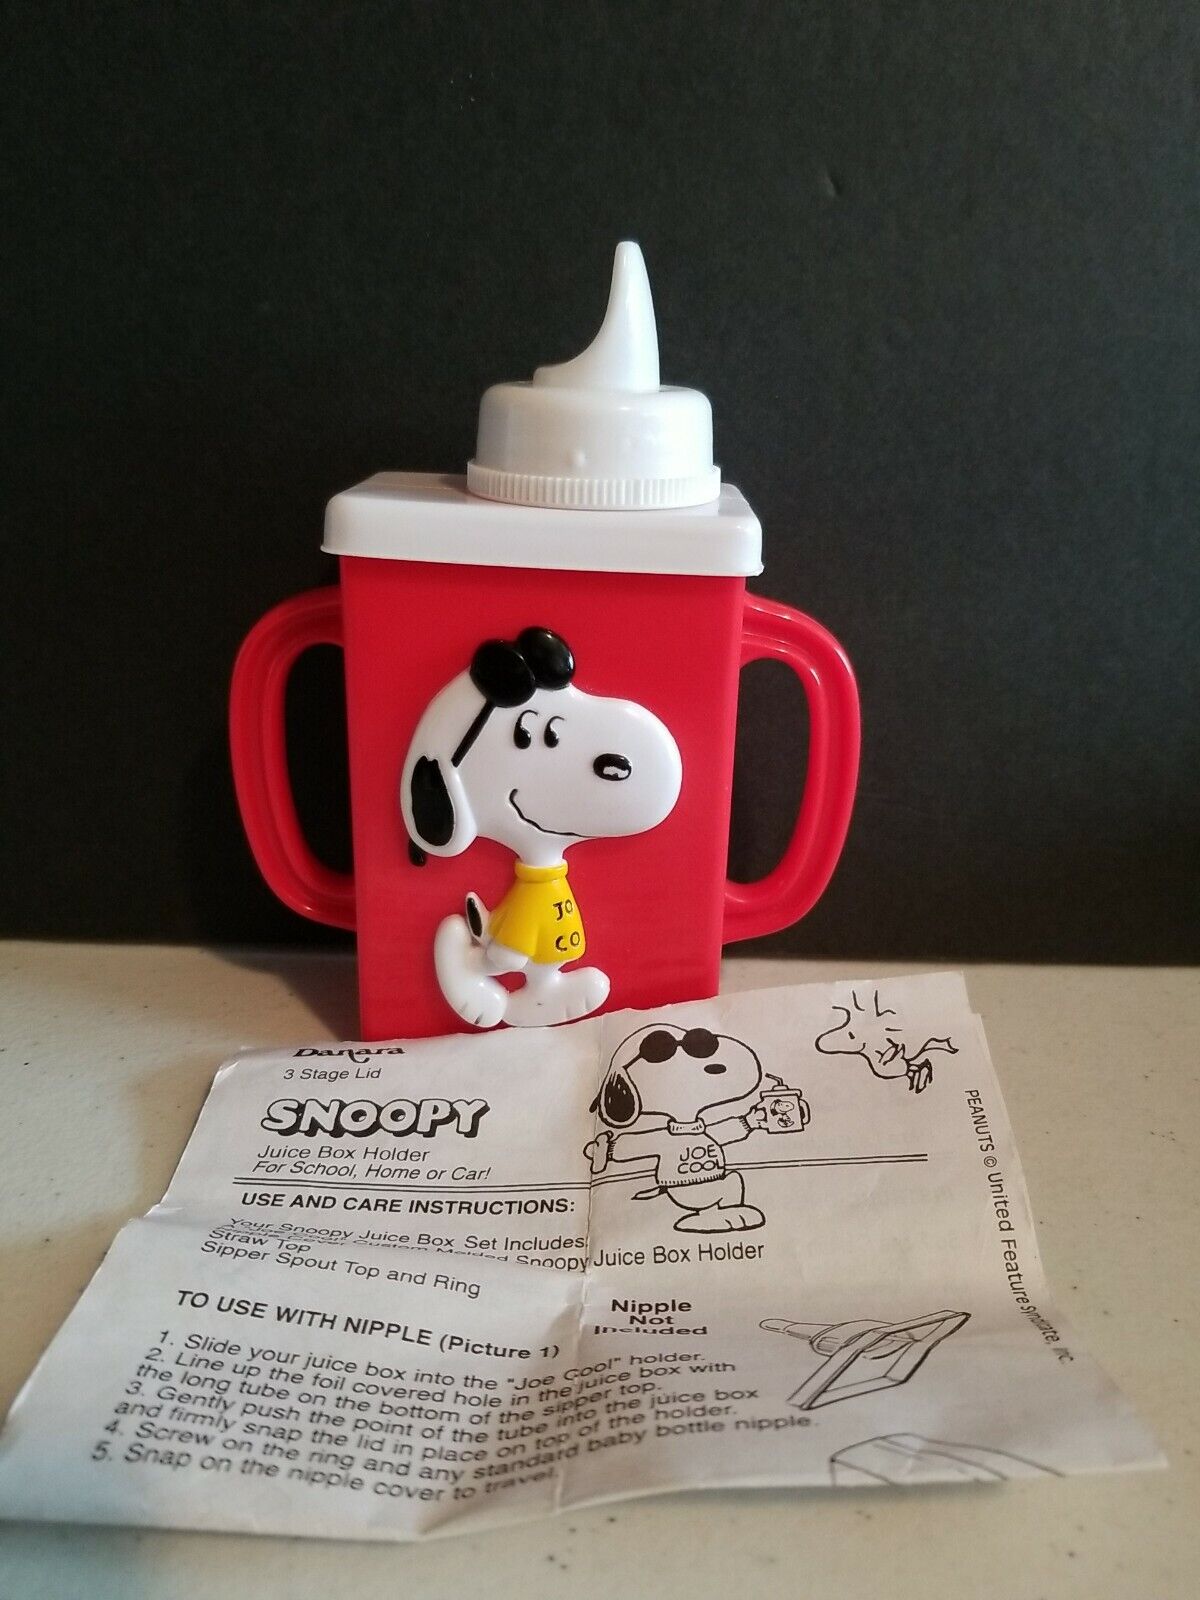 Vtg 1971 Danara Snoopy Joe Cool Juice Box Holder Sippy Cup Toddler Peanuts